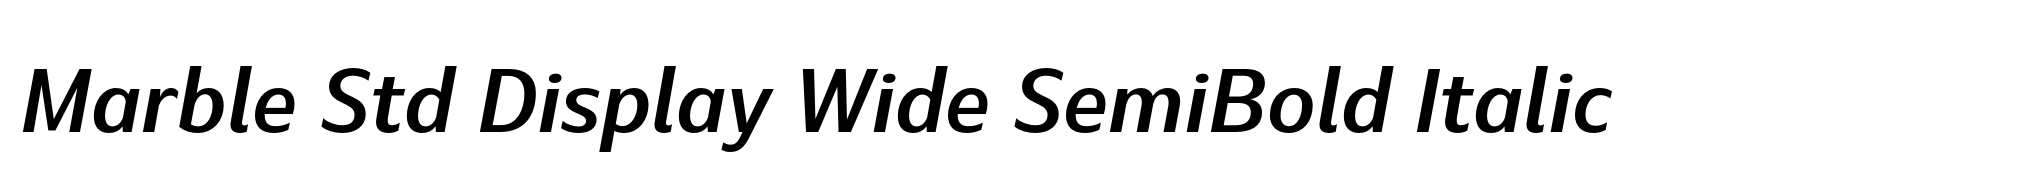 Marble Std Display Wide SemiBold Italic image